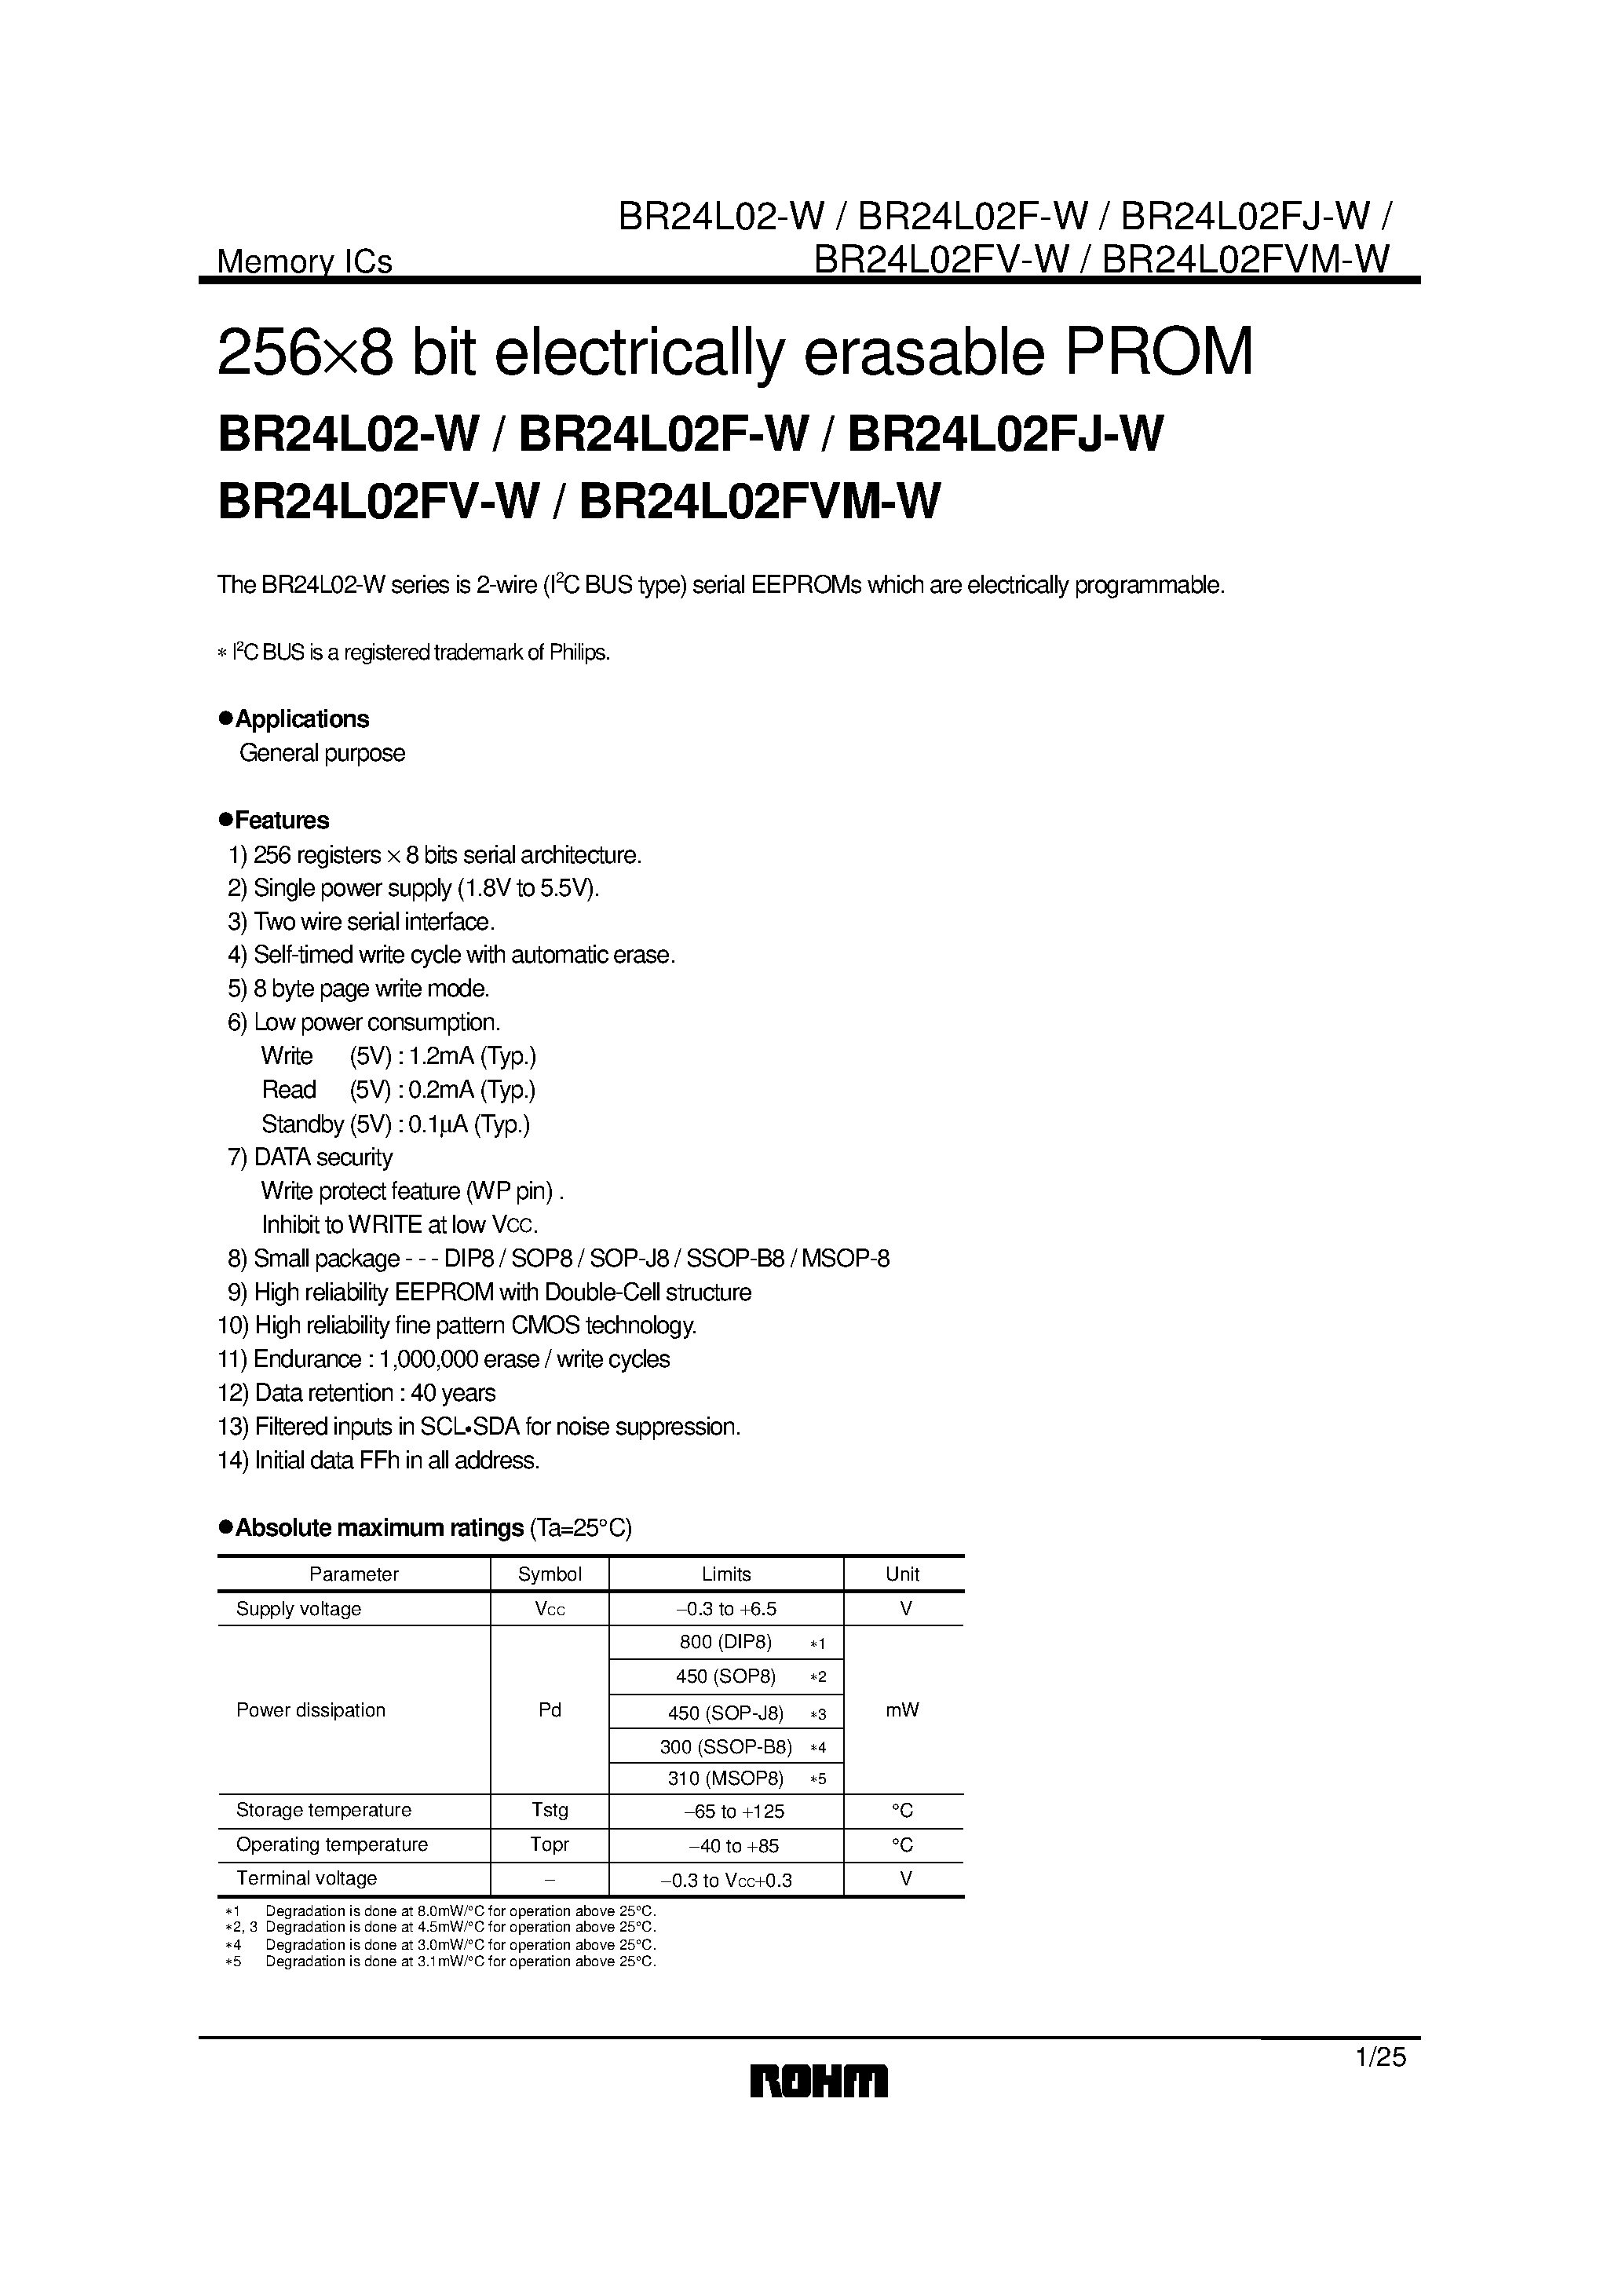 Datasheet BR24L02FJ-W - 256x8 bit electrically erasable PROM page 1